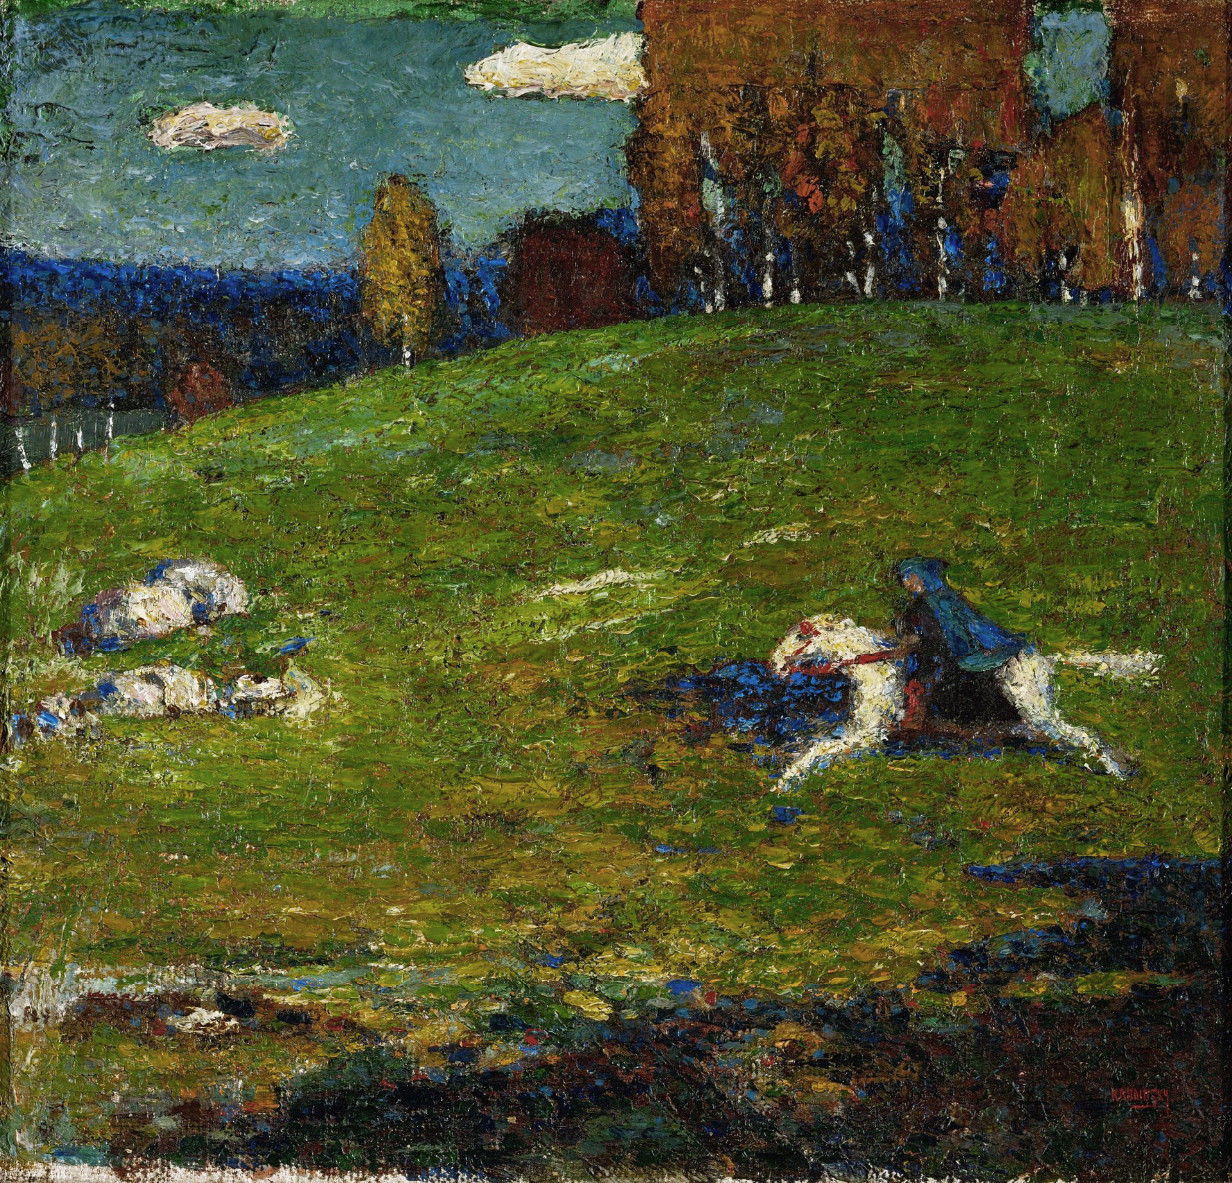 Début de l'expressionnisme, Der Blaue Reiter van de painterWassily Kandinsky, 1903